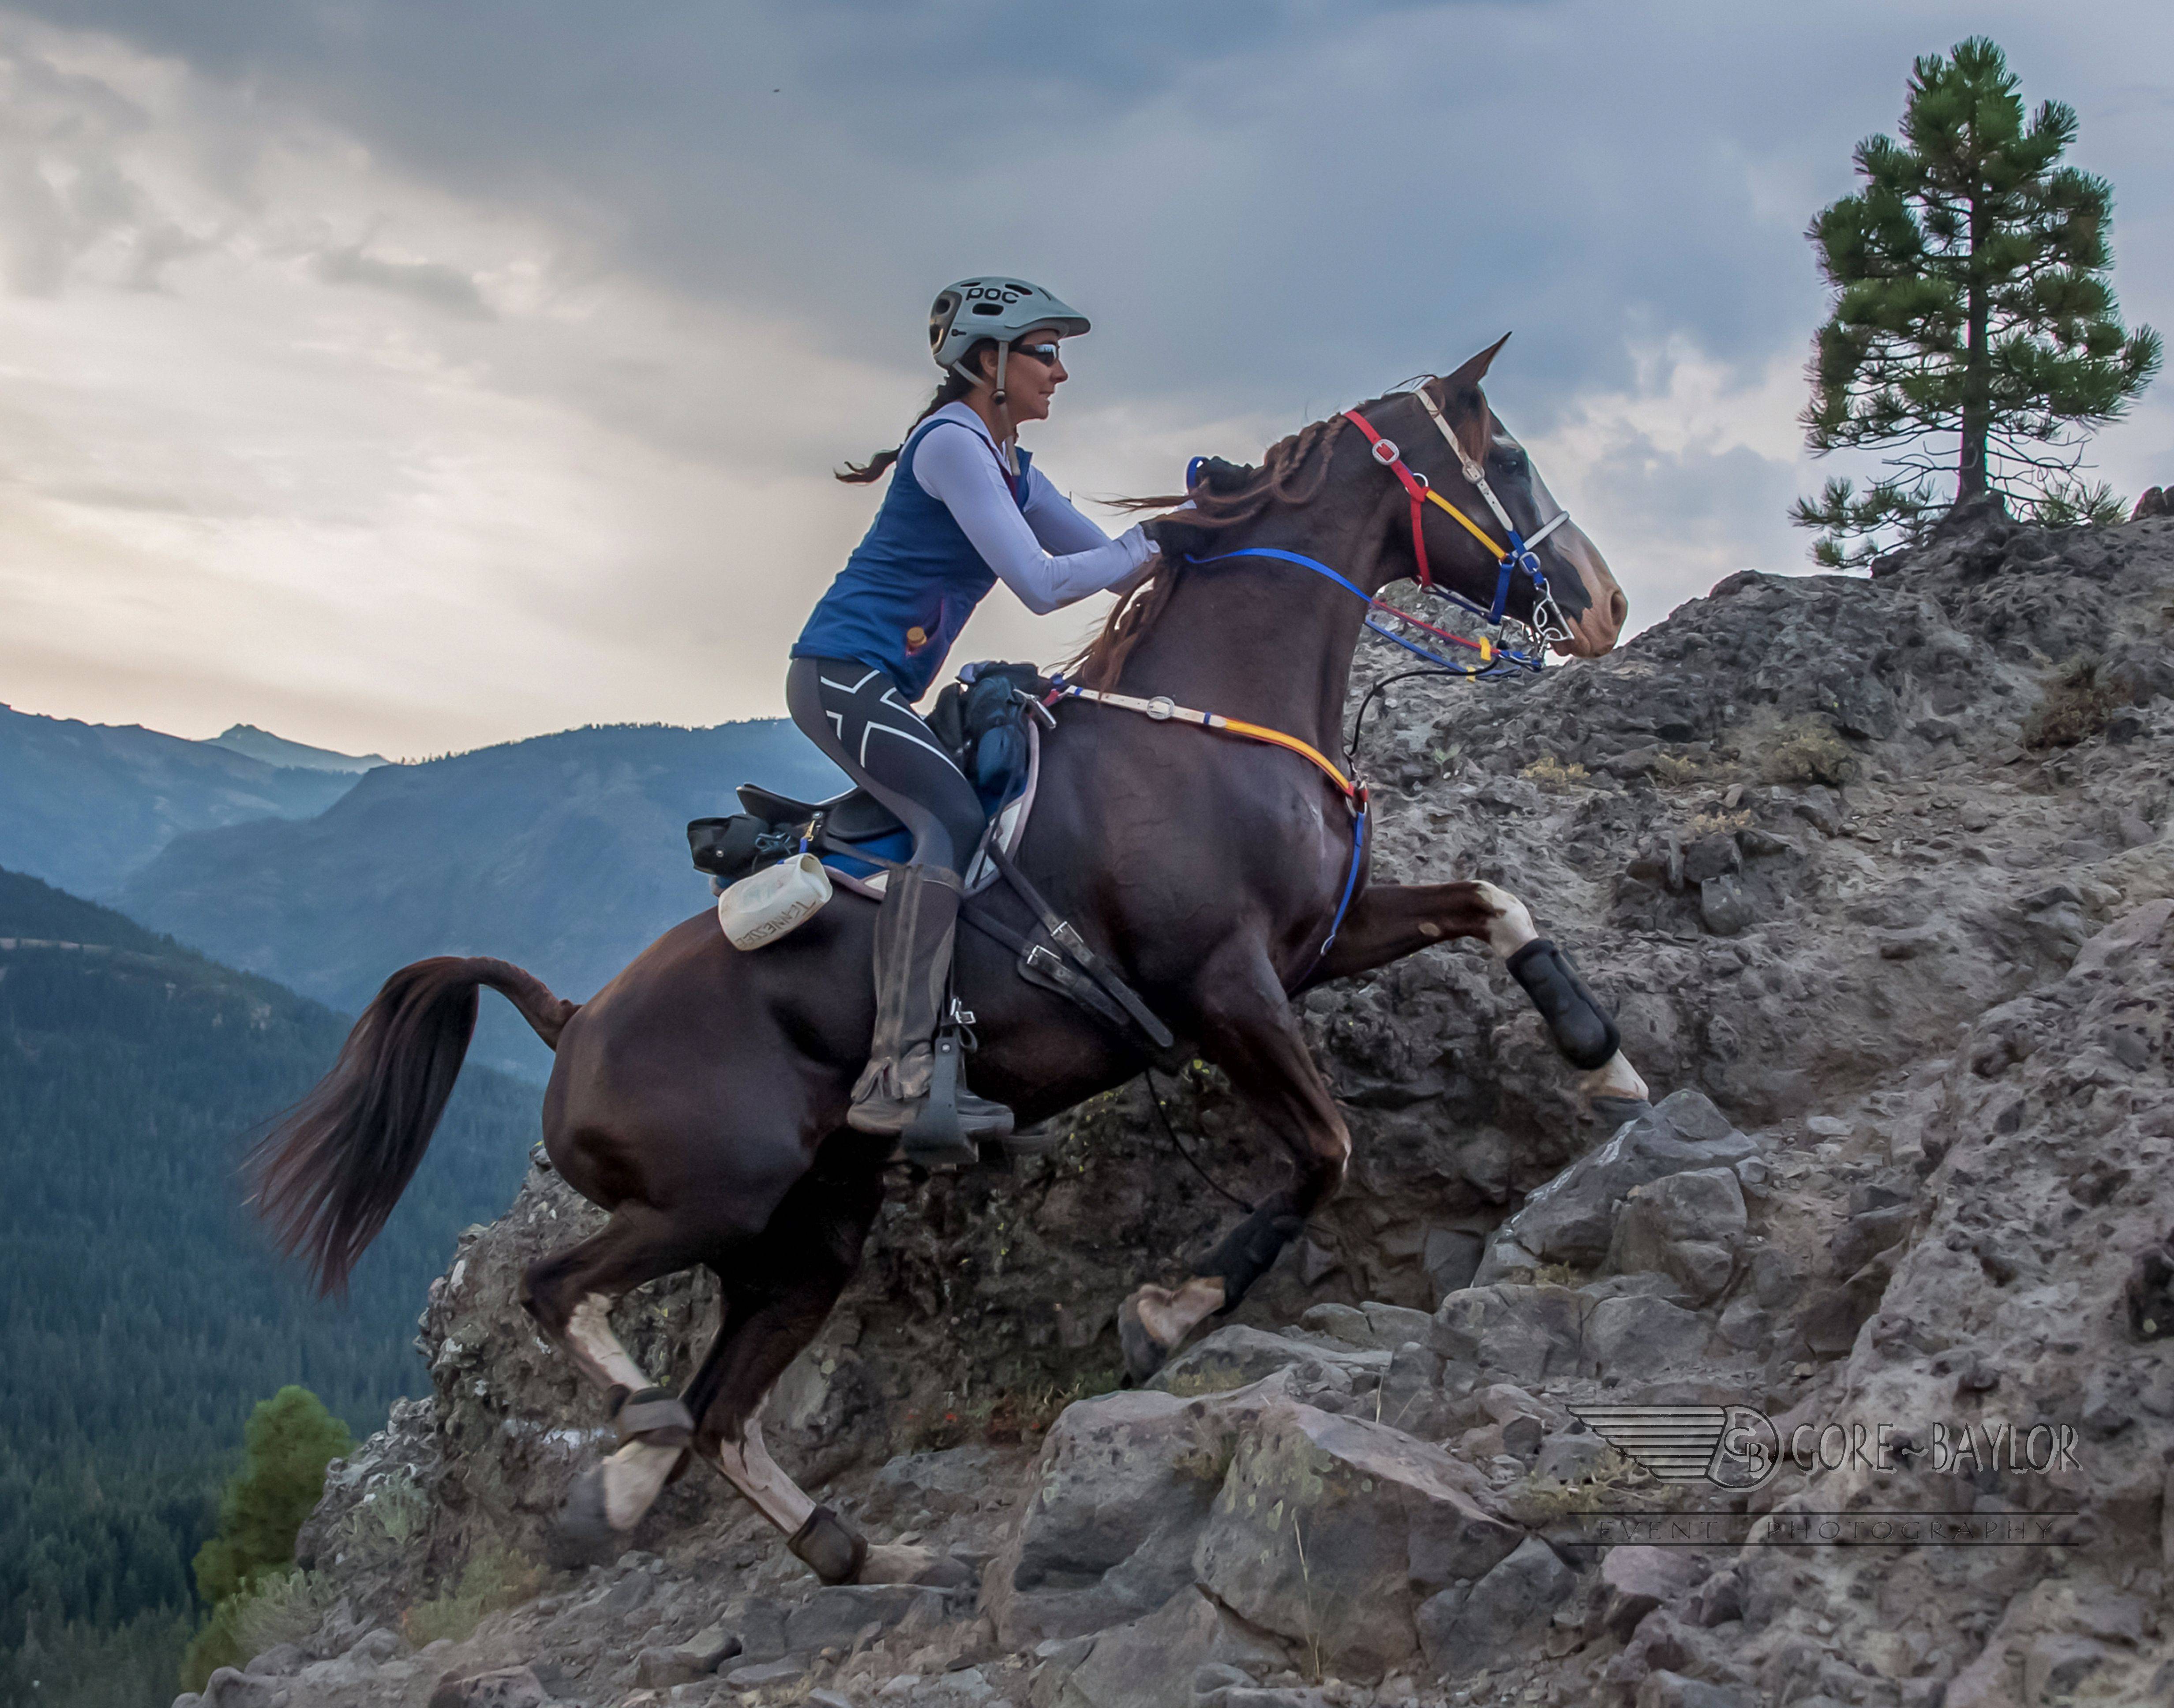 Start ride. Лошади в горах. Конный спорт. Фотосессия с лошадьми в горах. Езда на лошадях в горах.